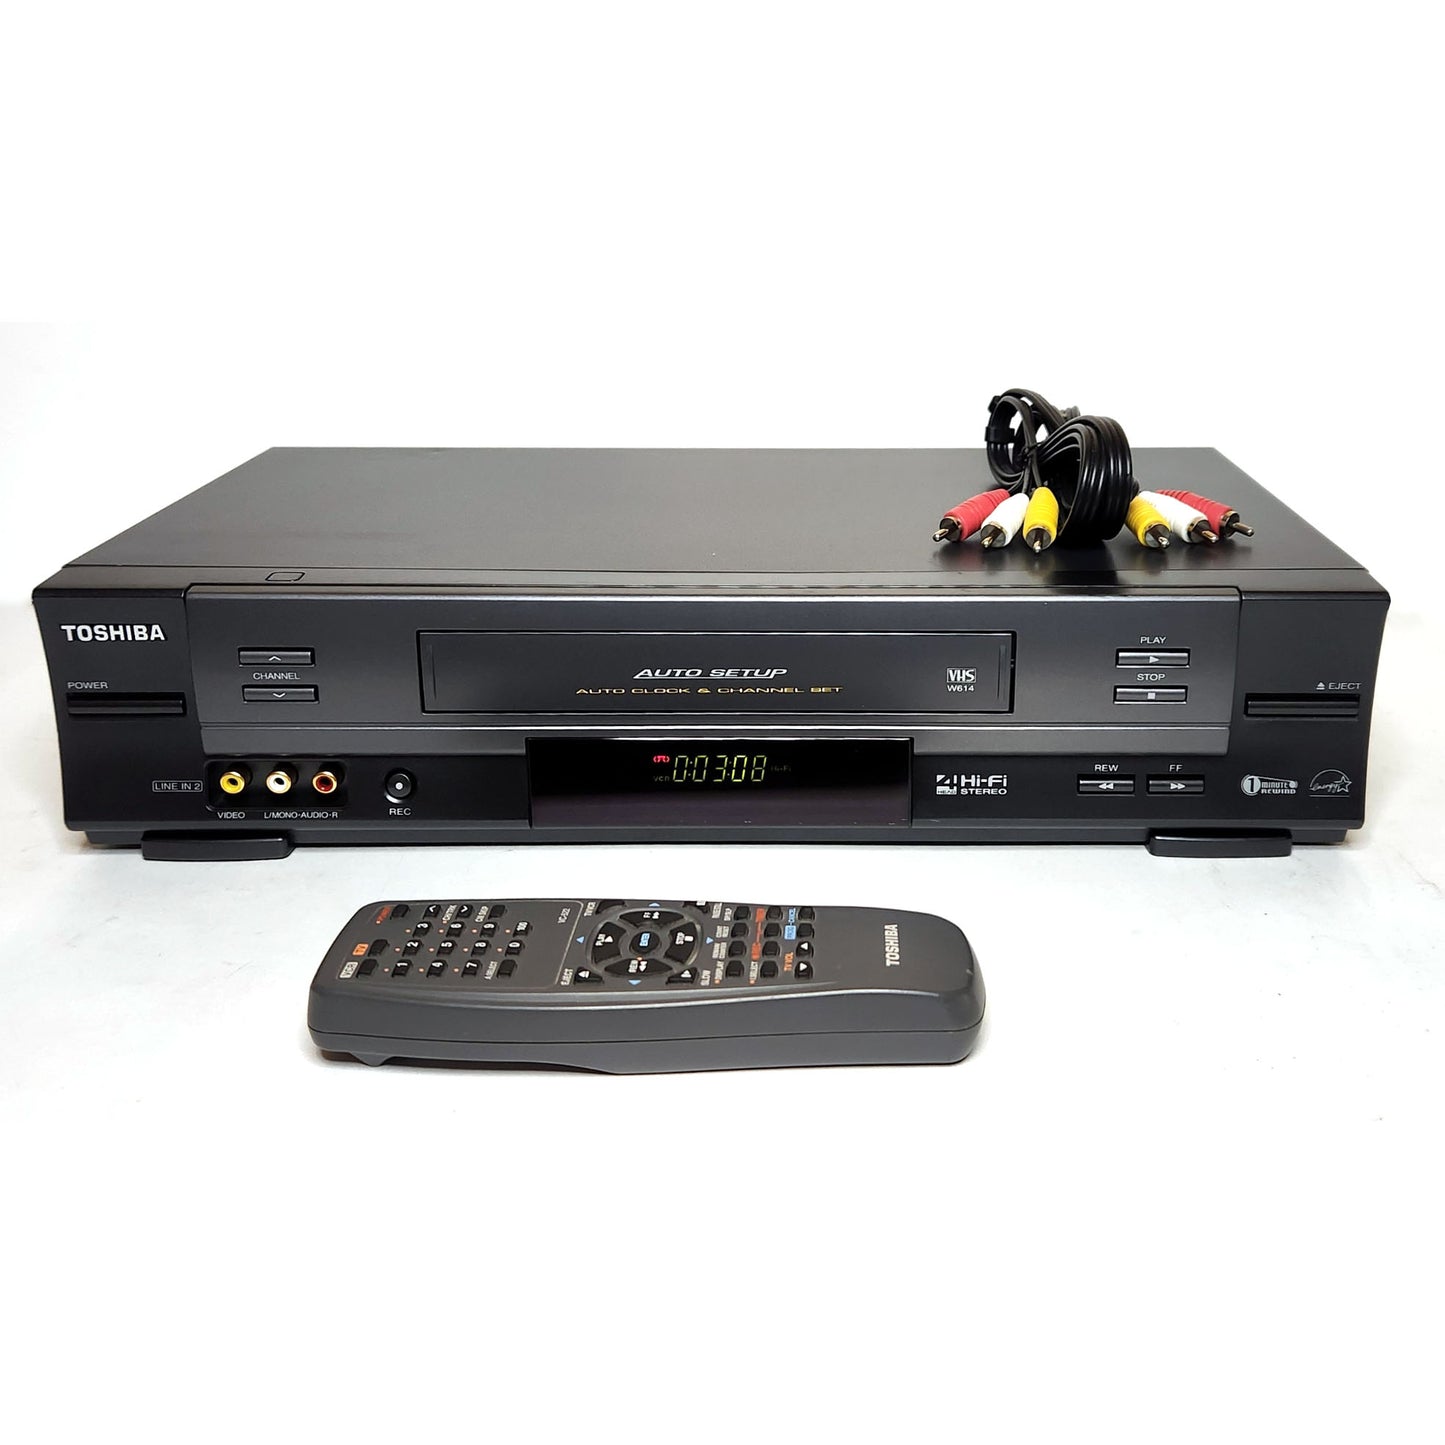 Toshiba W-614 VCR, 4-Head Hi-Fi Stereo